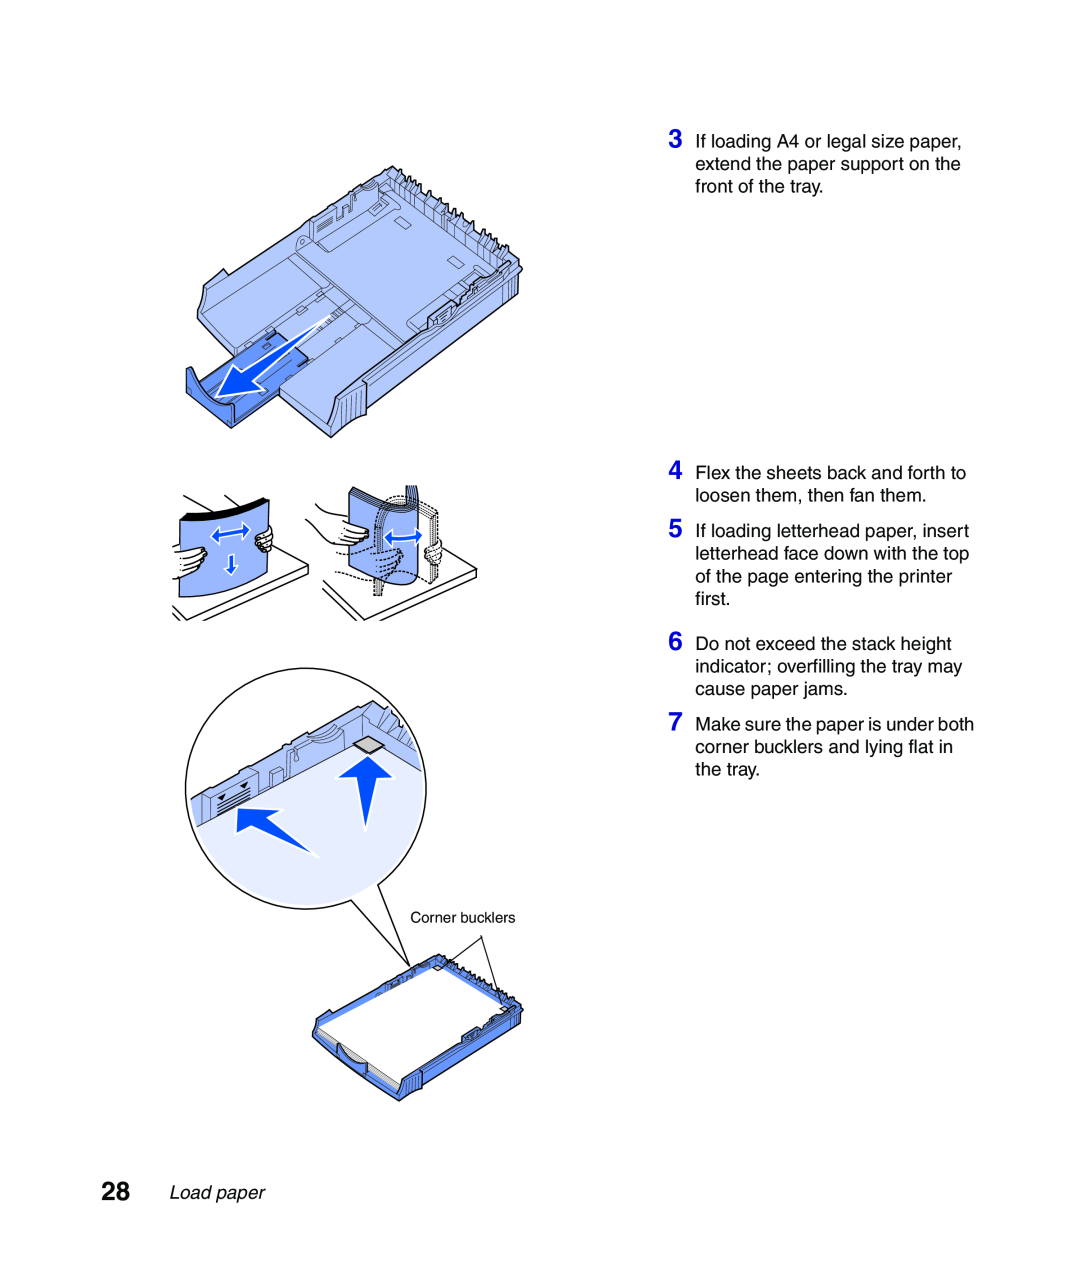 Lexmark Infoprint 1116 setup guide Load paper, Corner bucklers 